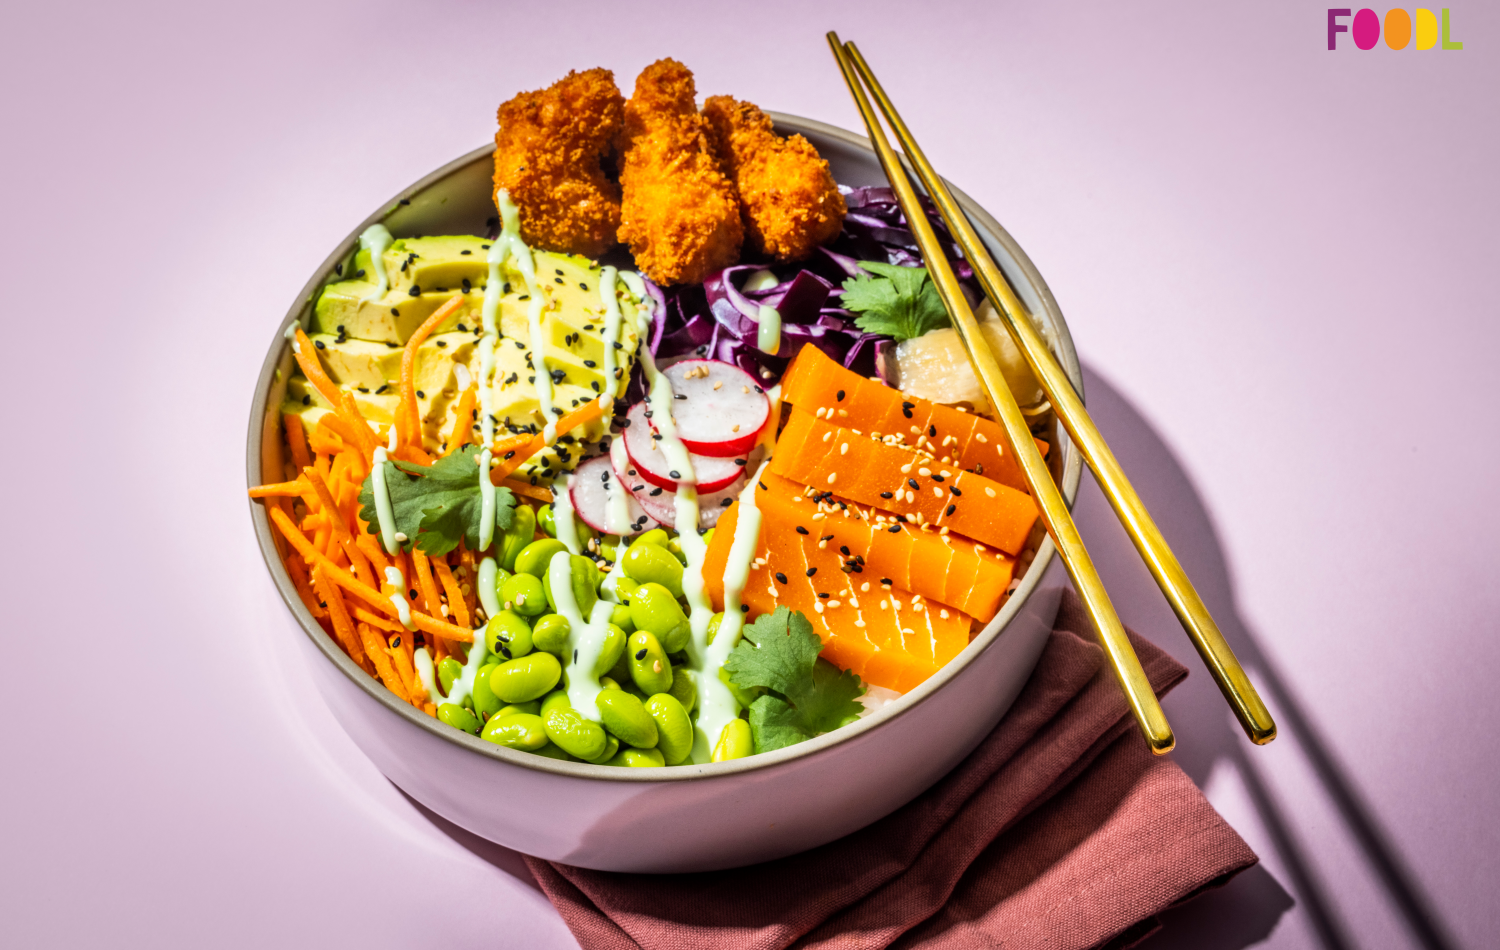 Pokebowl met vegan zalm, vegan shrimps van sparc kitchen en wasabi mayonaise van de Mayoneurs